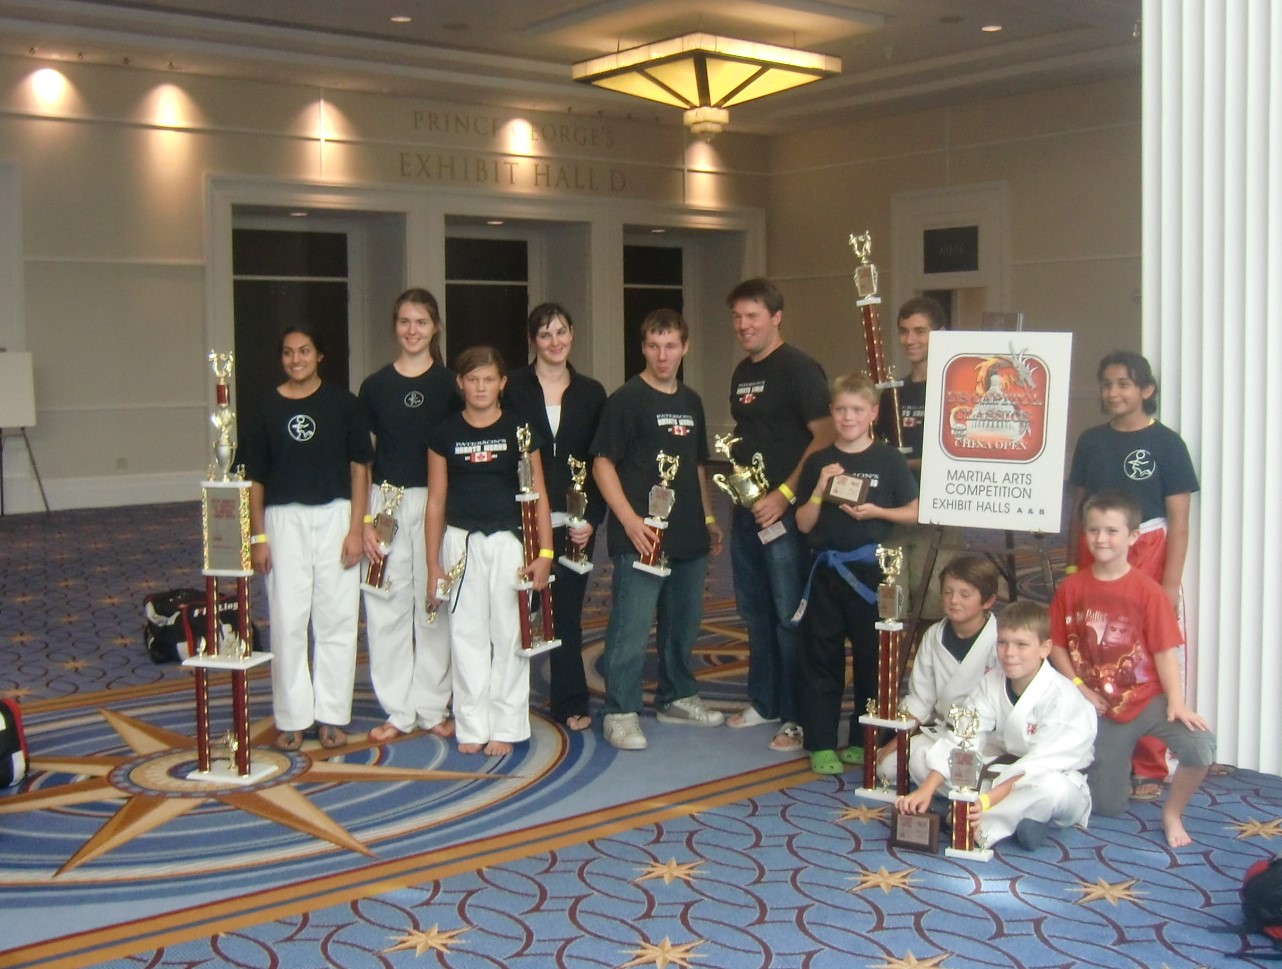 Group tournament photo